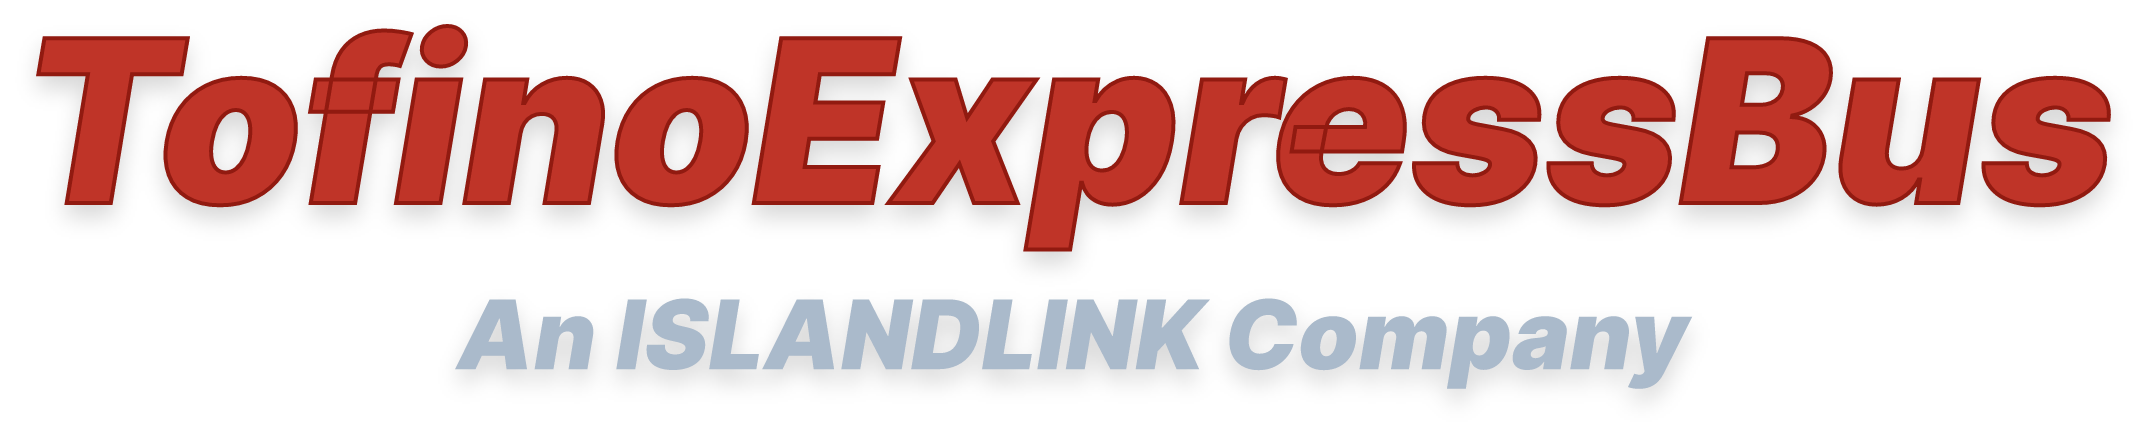 island link bus logo